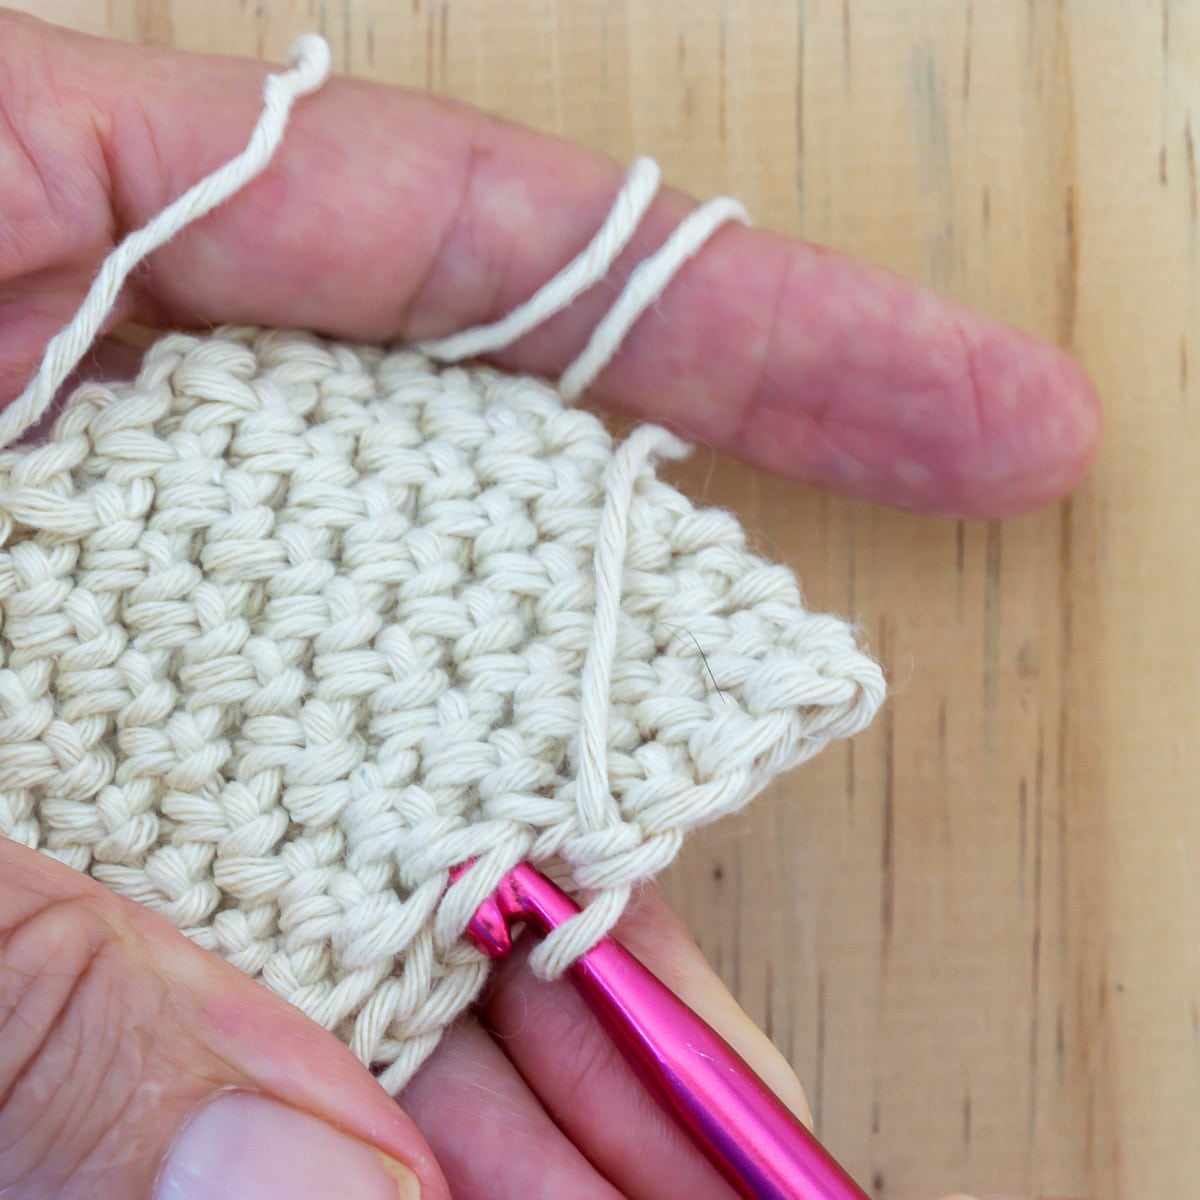 Pushing crochet hook through fabric.